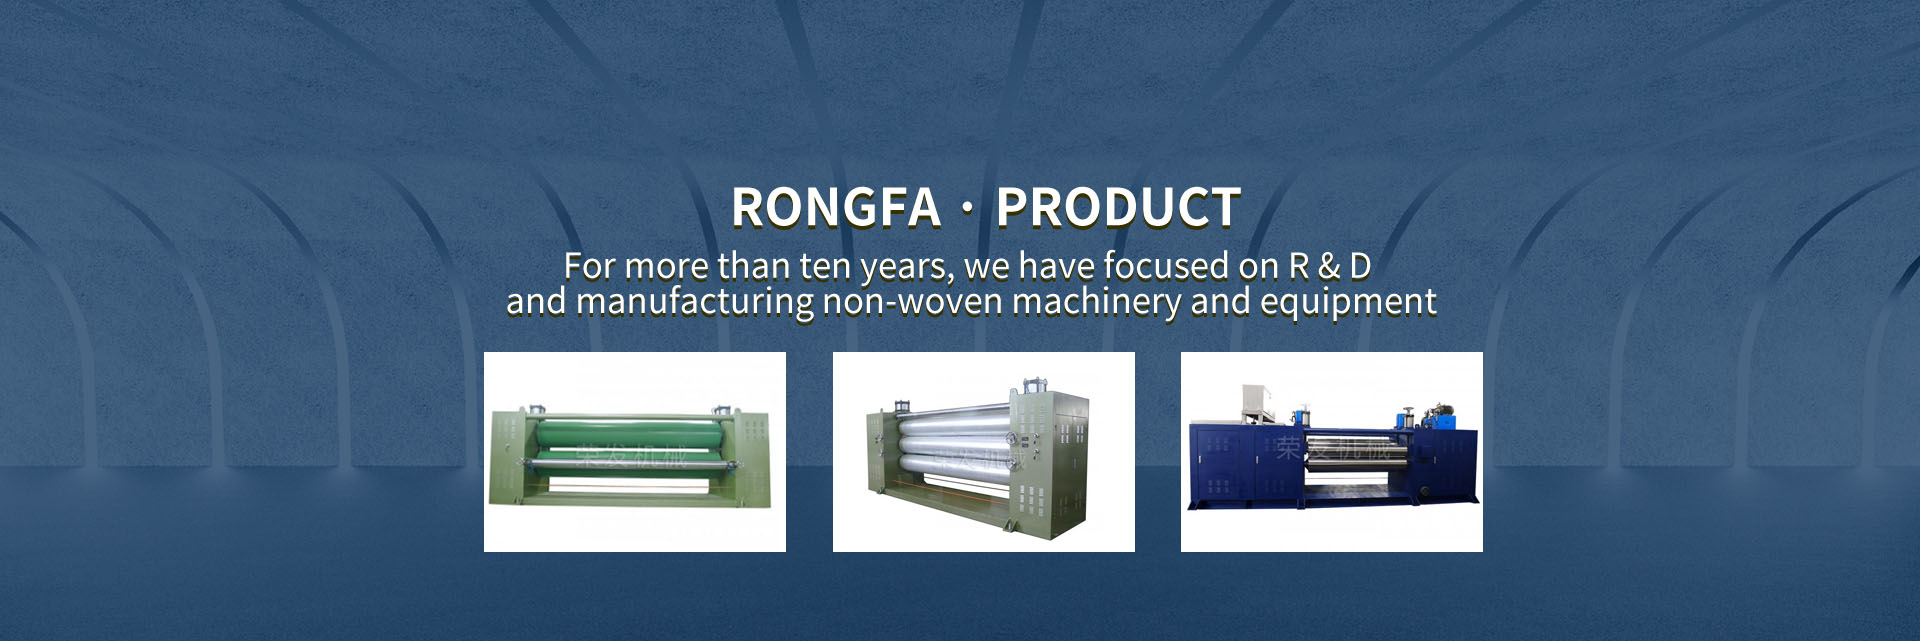 Non-woven equipment manufacturers_non-woven machinery equipment_non-woven machinery production line_kaiping Rongfa machinery Co., ltd.